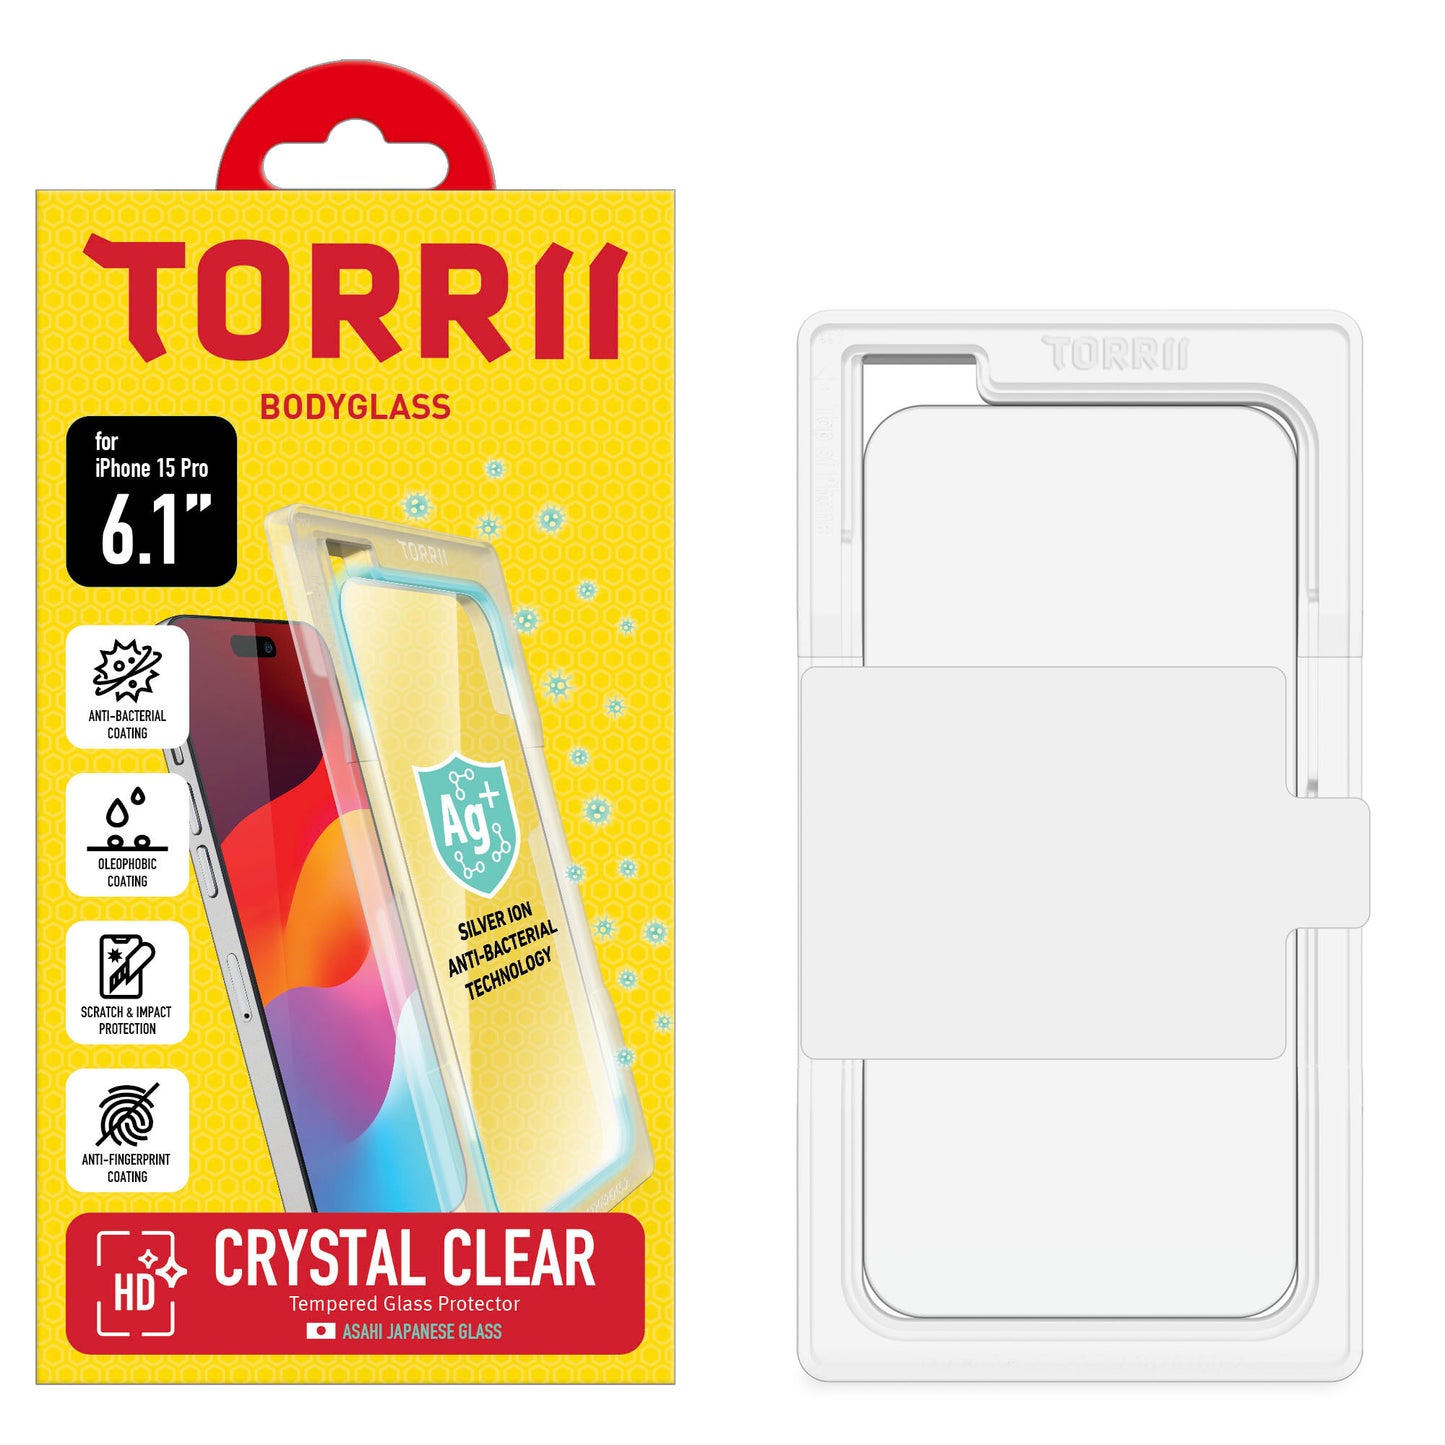 Torrii BODYGLASS 抗菌塗層玻璃保護貼 for iPhone 15 Pro